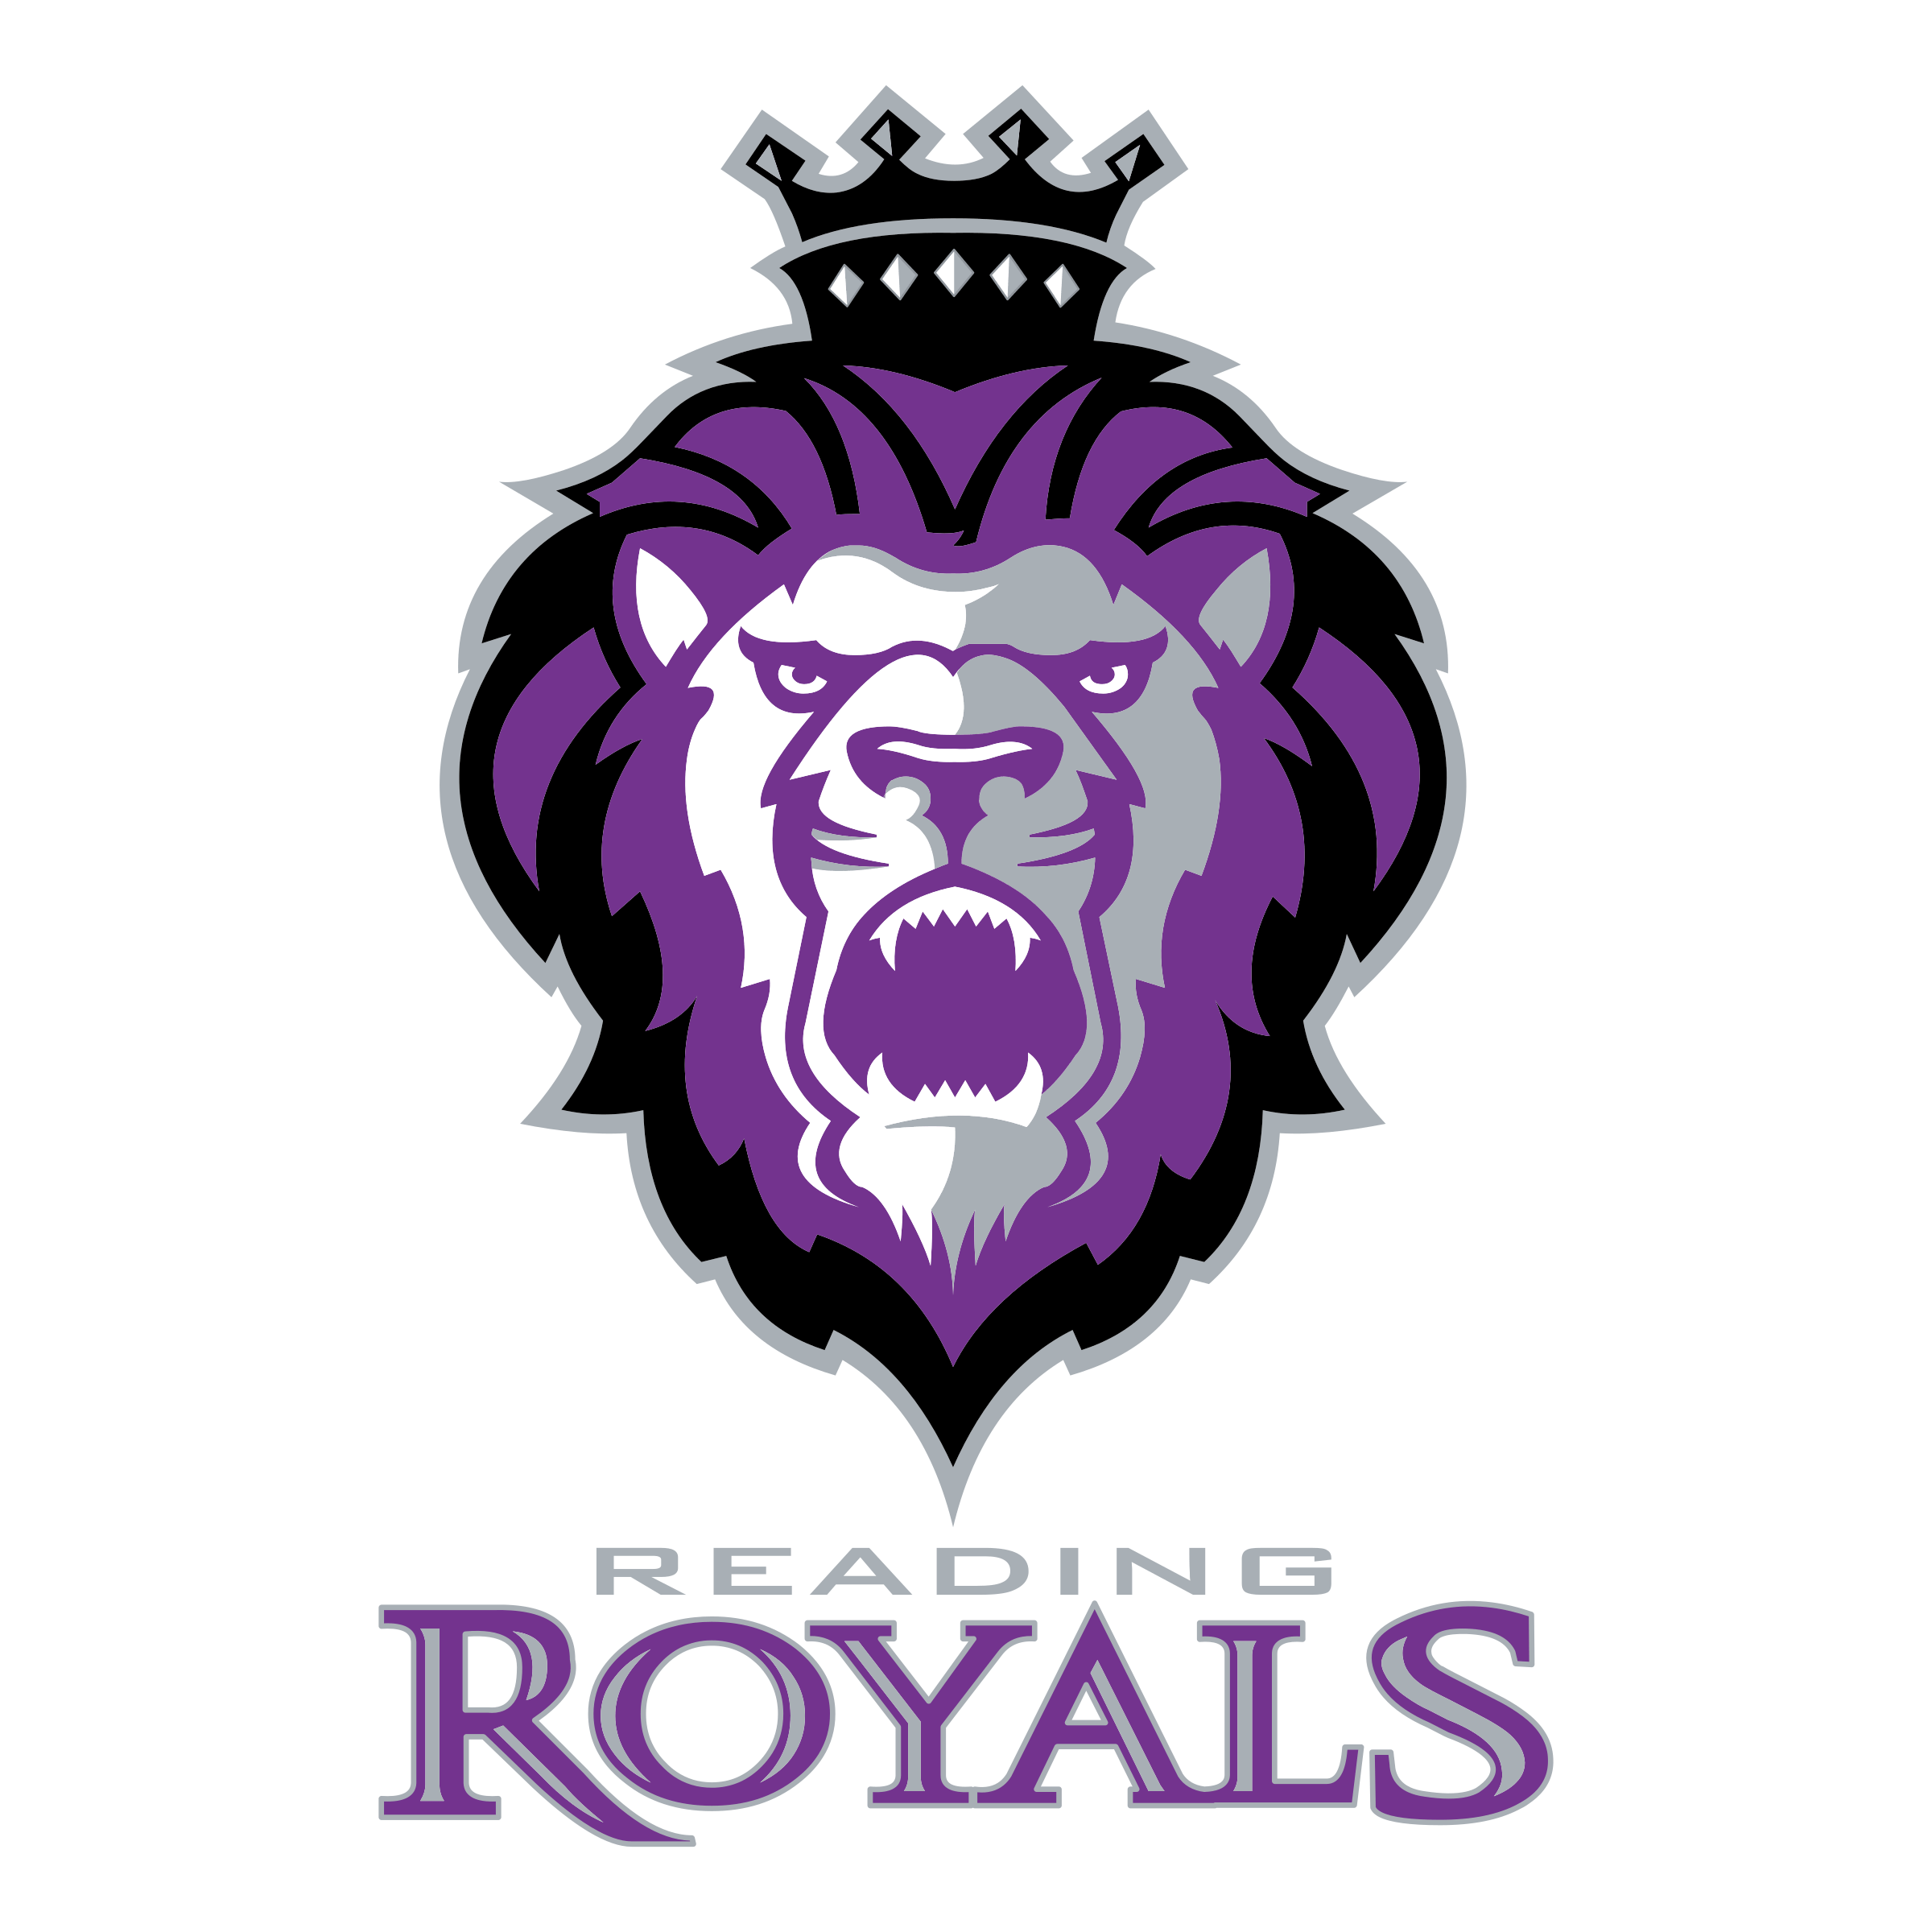 Transparent Royals Logo - Reading Royals Logo PNG Transparent & SVG Vector